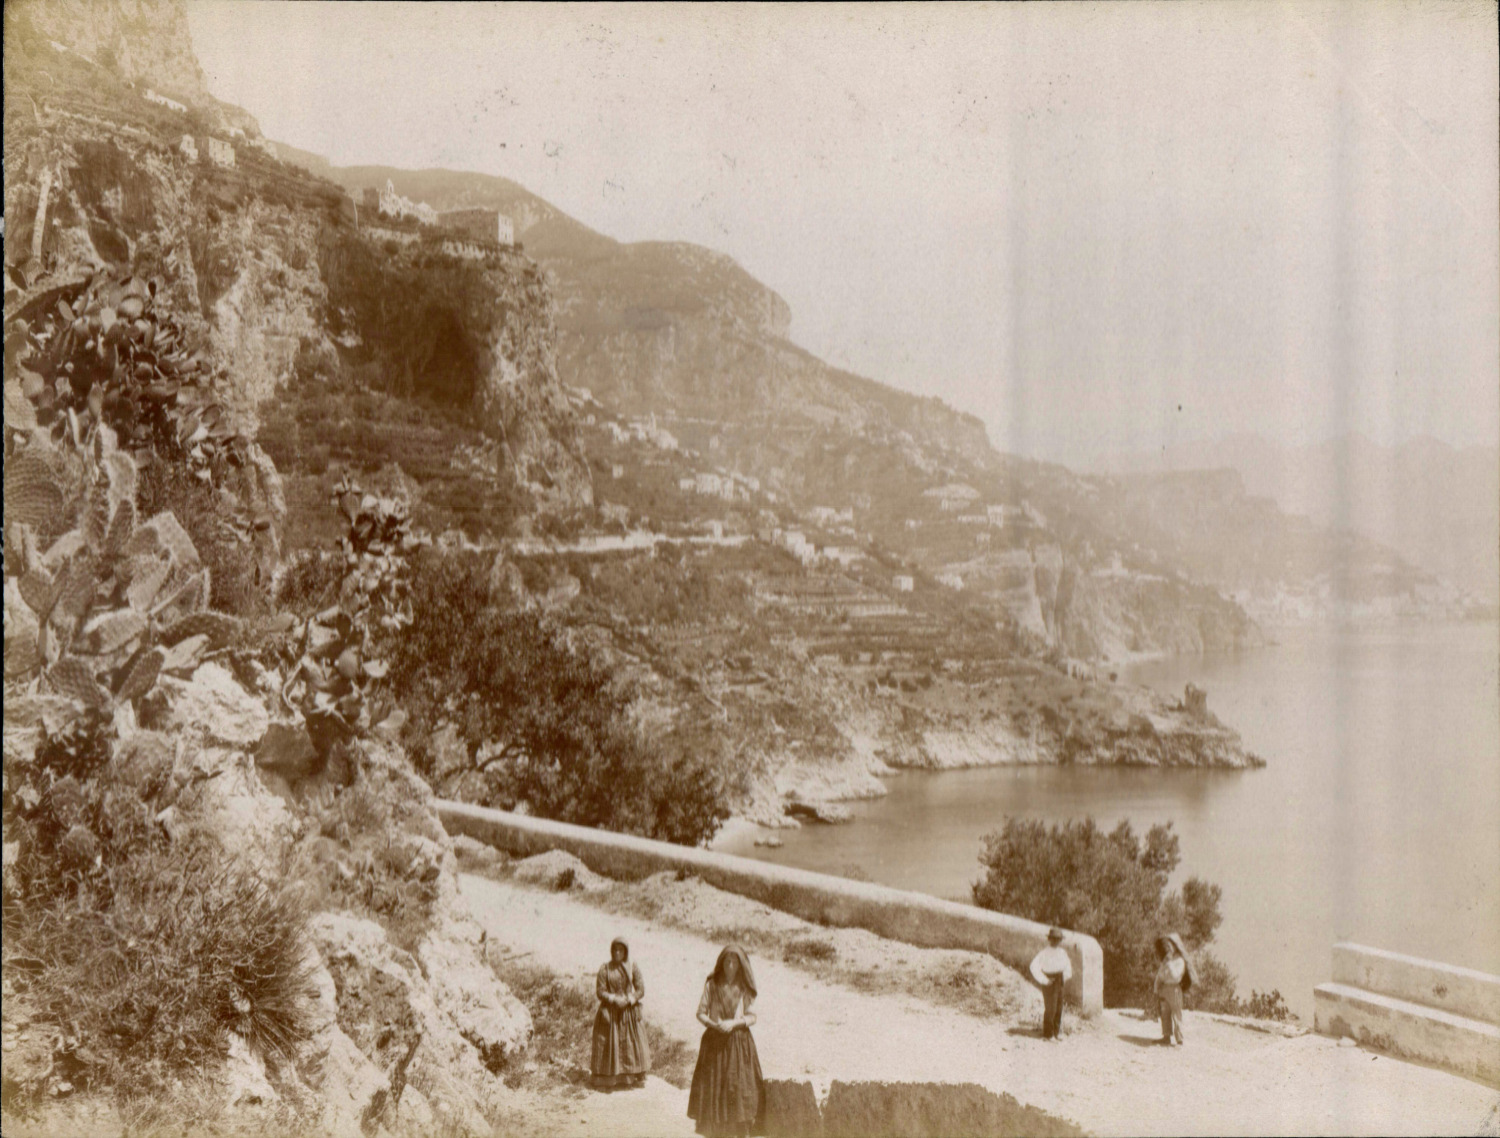 Carlo Brogi, Italy, Outlines of Naples, Amalfi Riviera, vintage albumine pri 